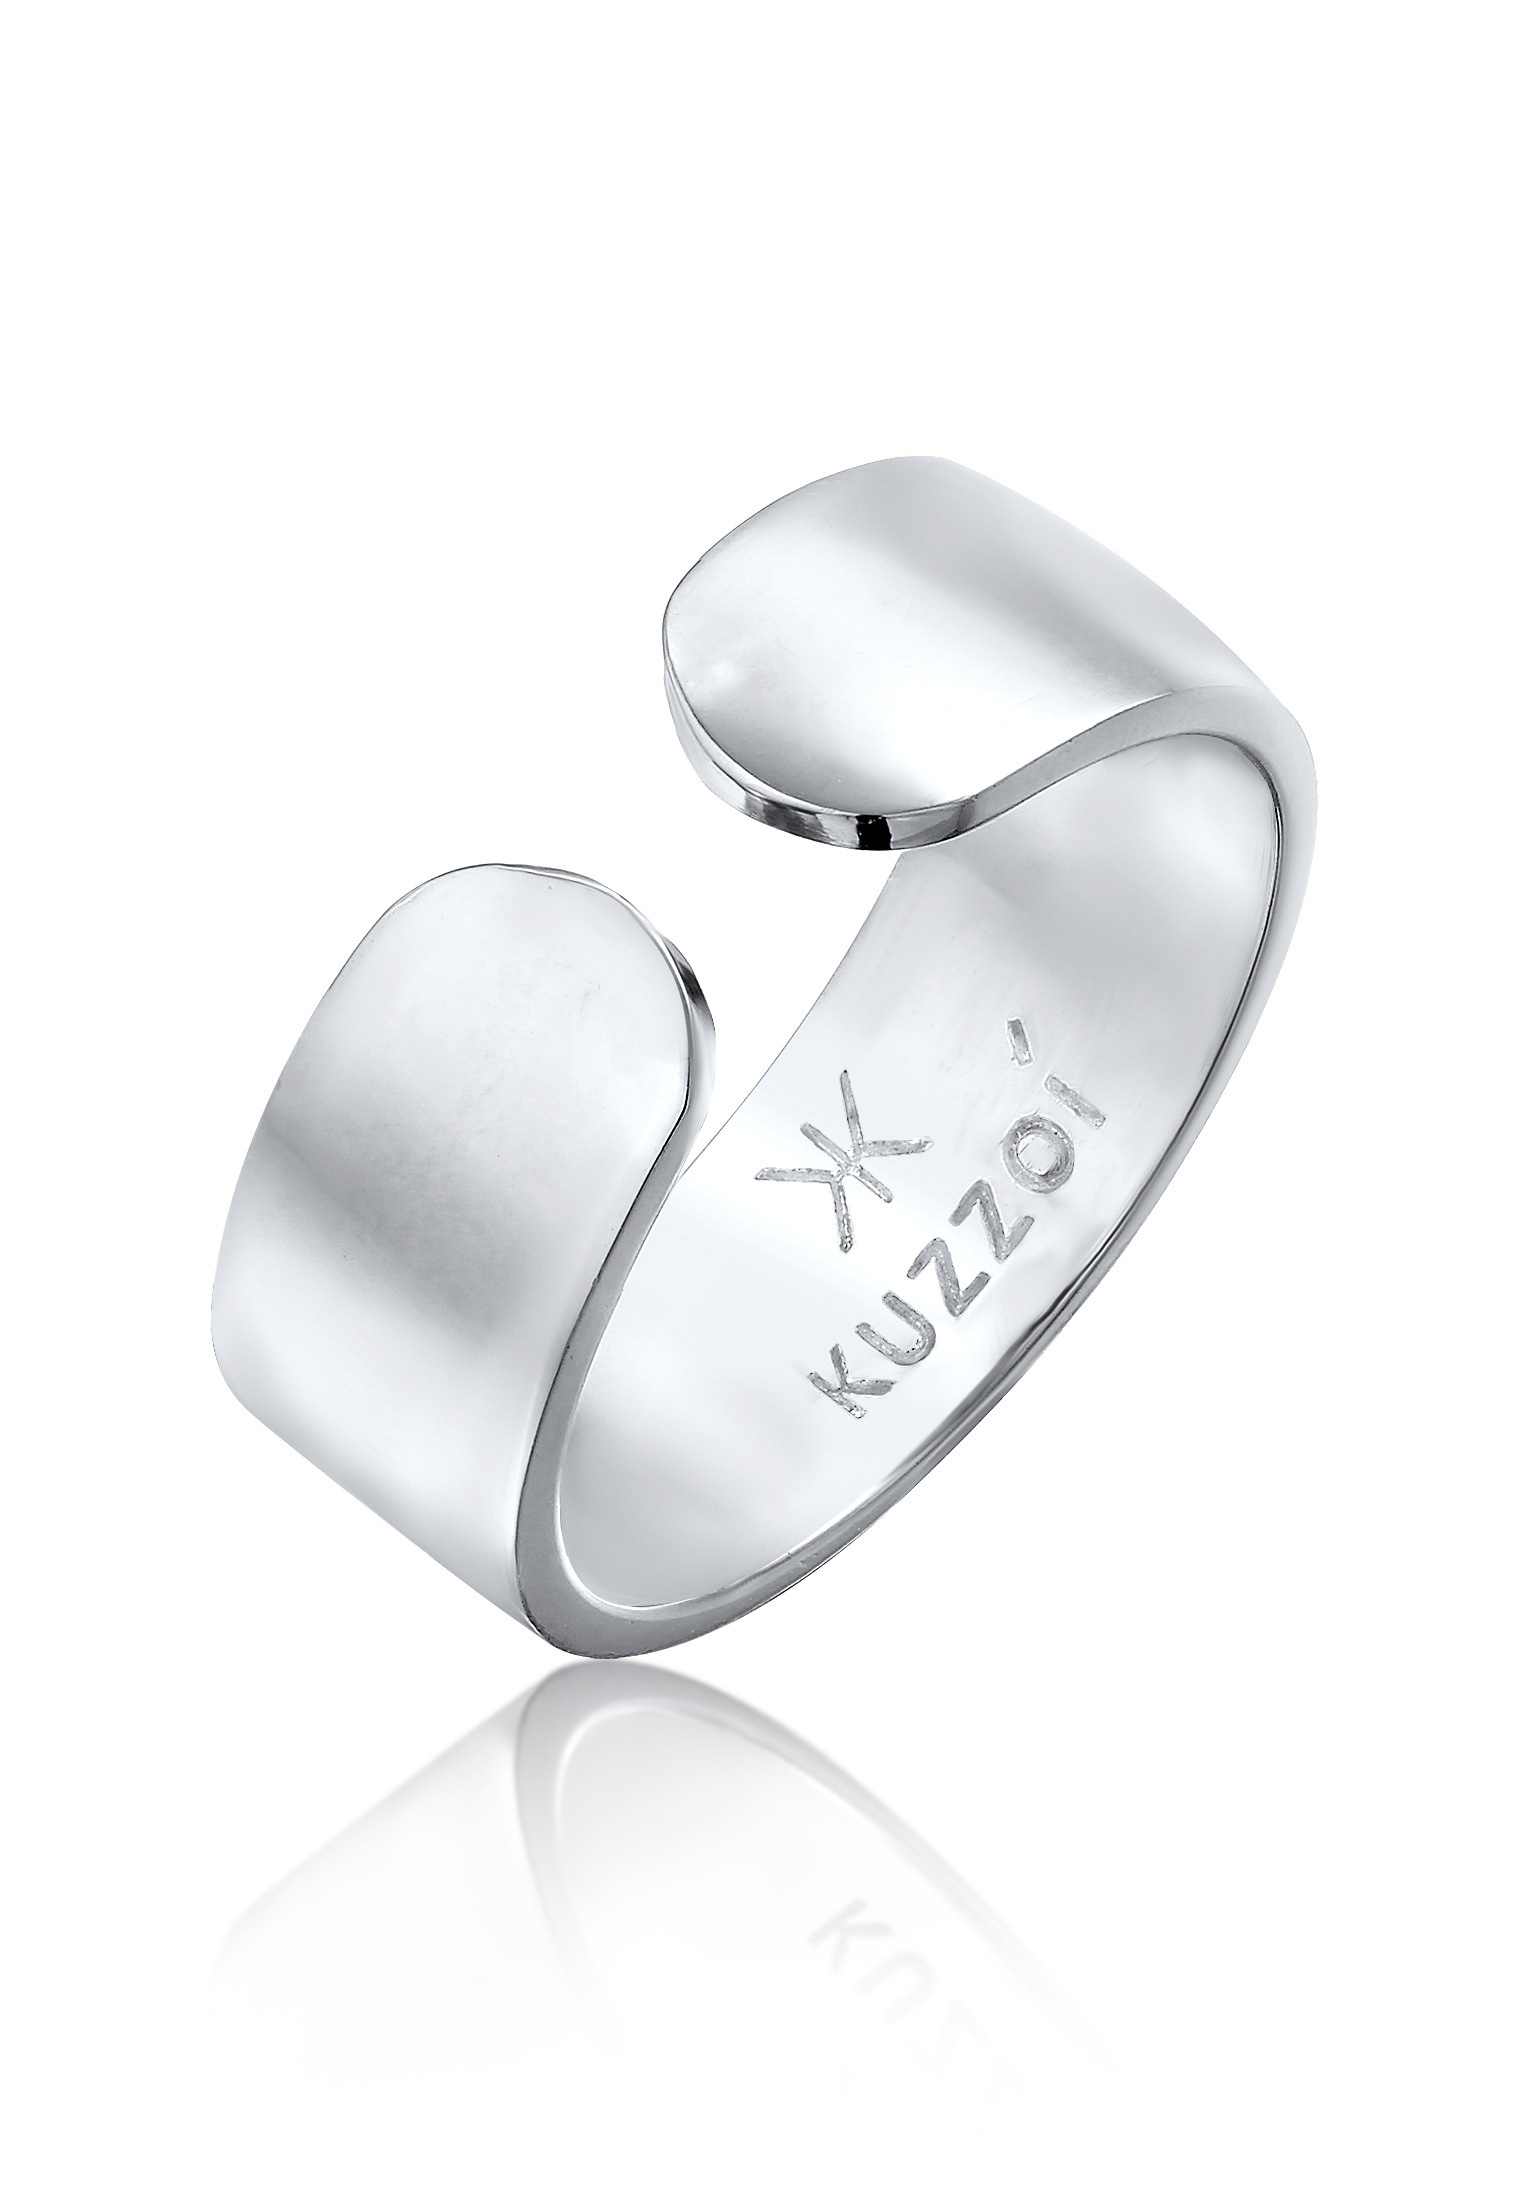 Kuzzoi Silberring »Bandring Klares Design Offen 925 Silber« im Onlineshop |  I\'m walking